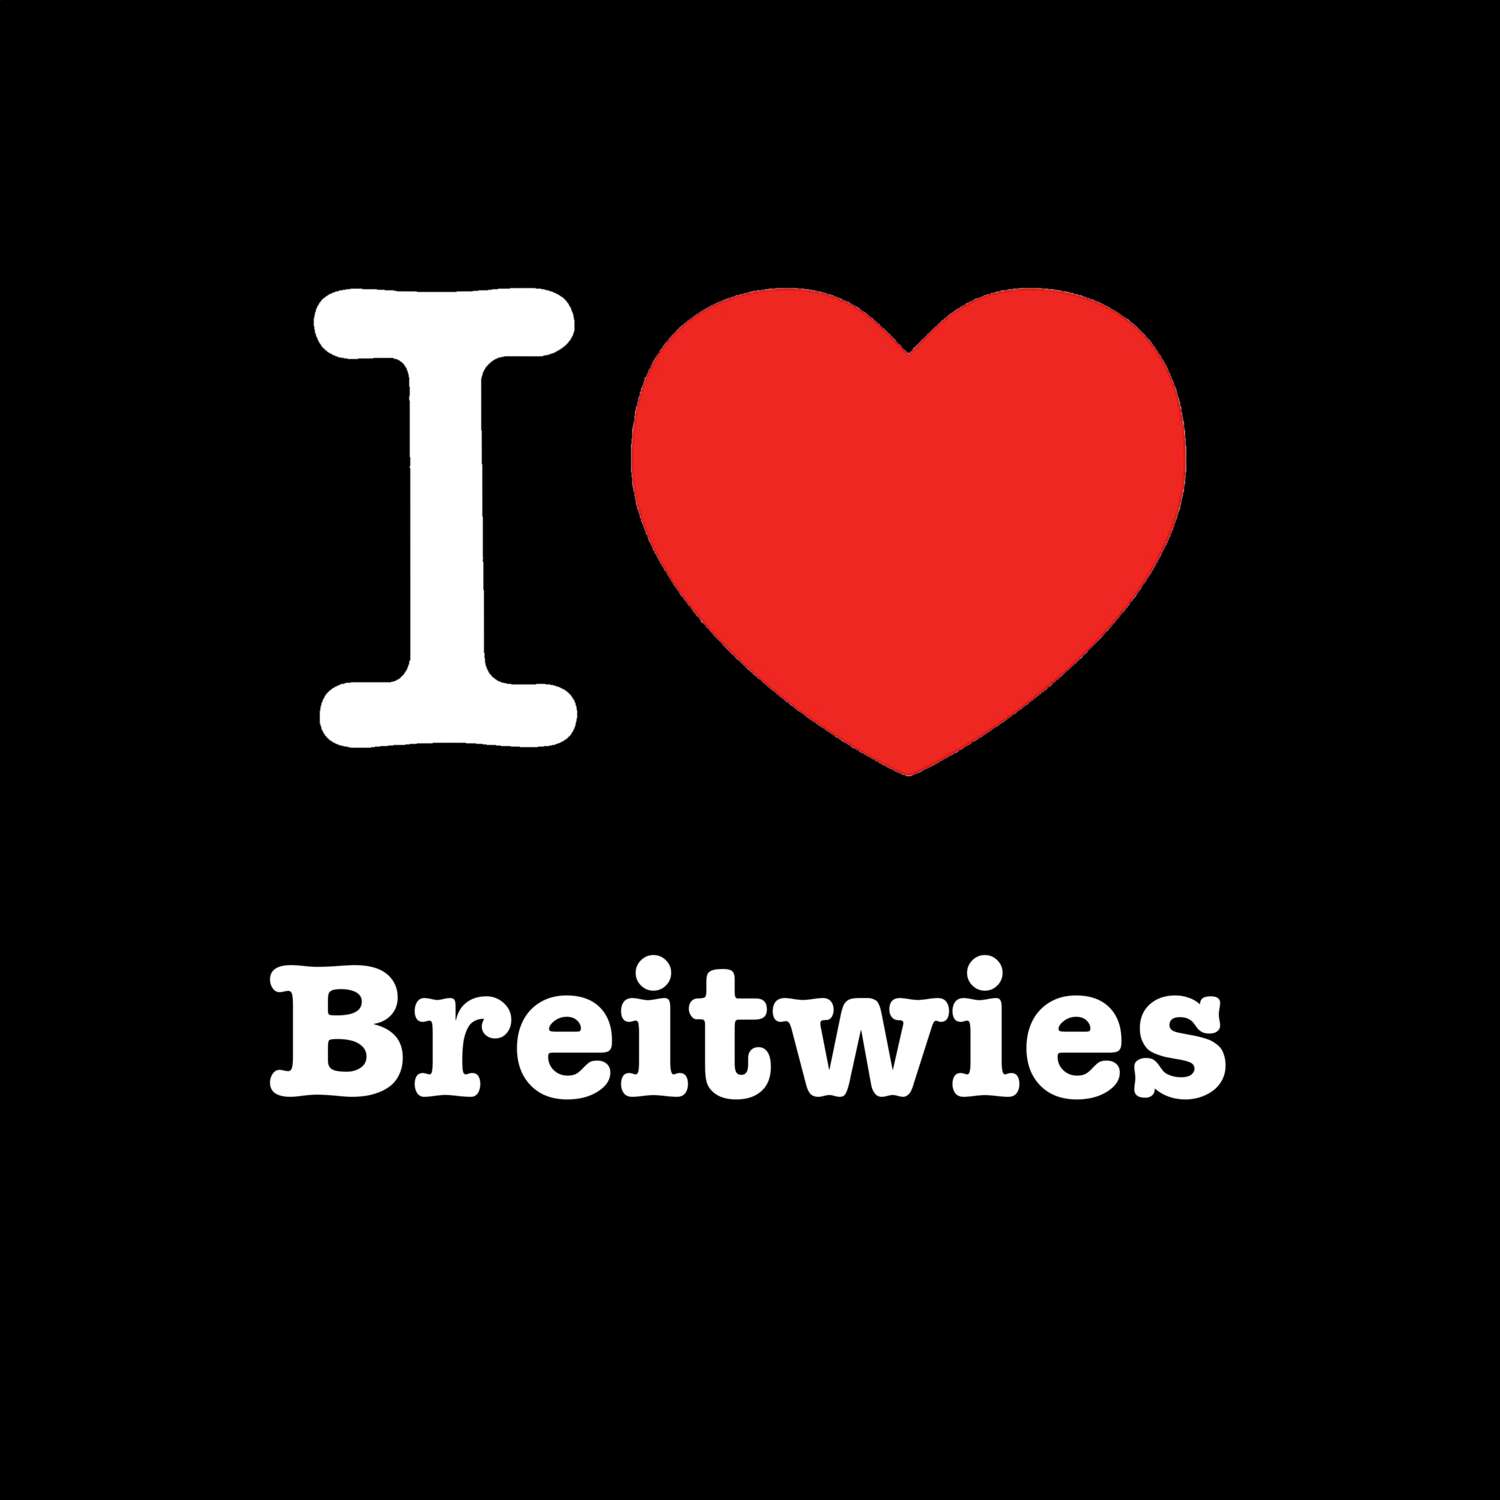 Breitwies T-Shirt »I love«